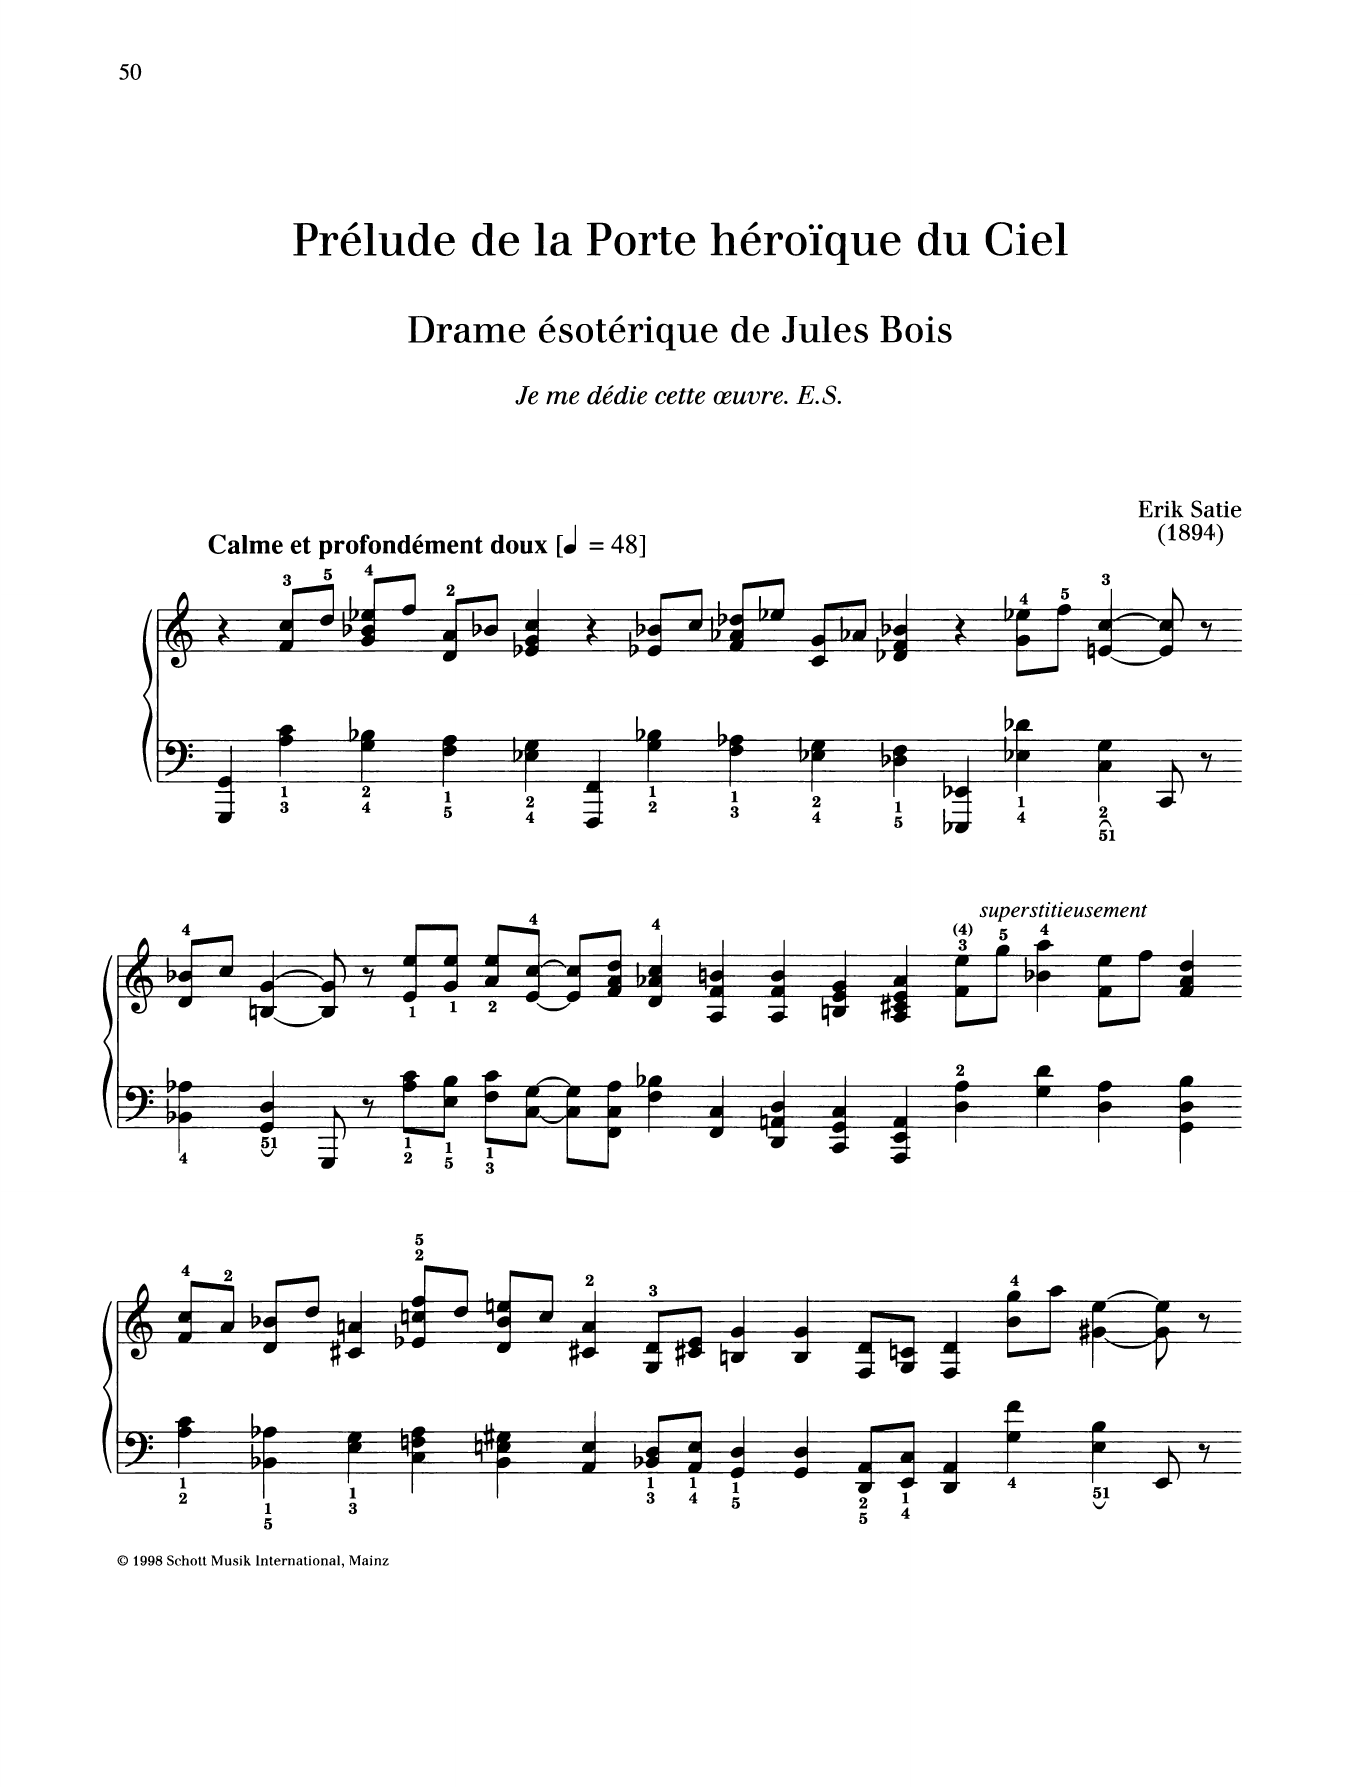 Prelude de la Porte heroique du Ciel sheet music